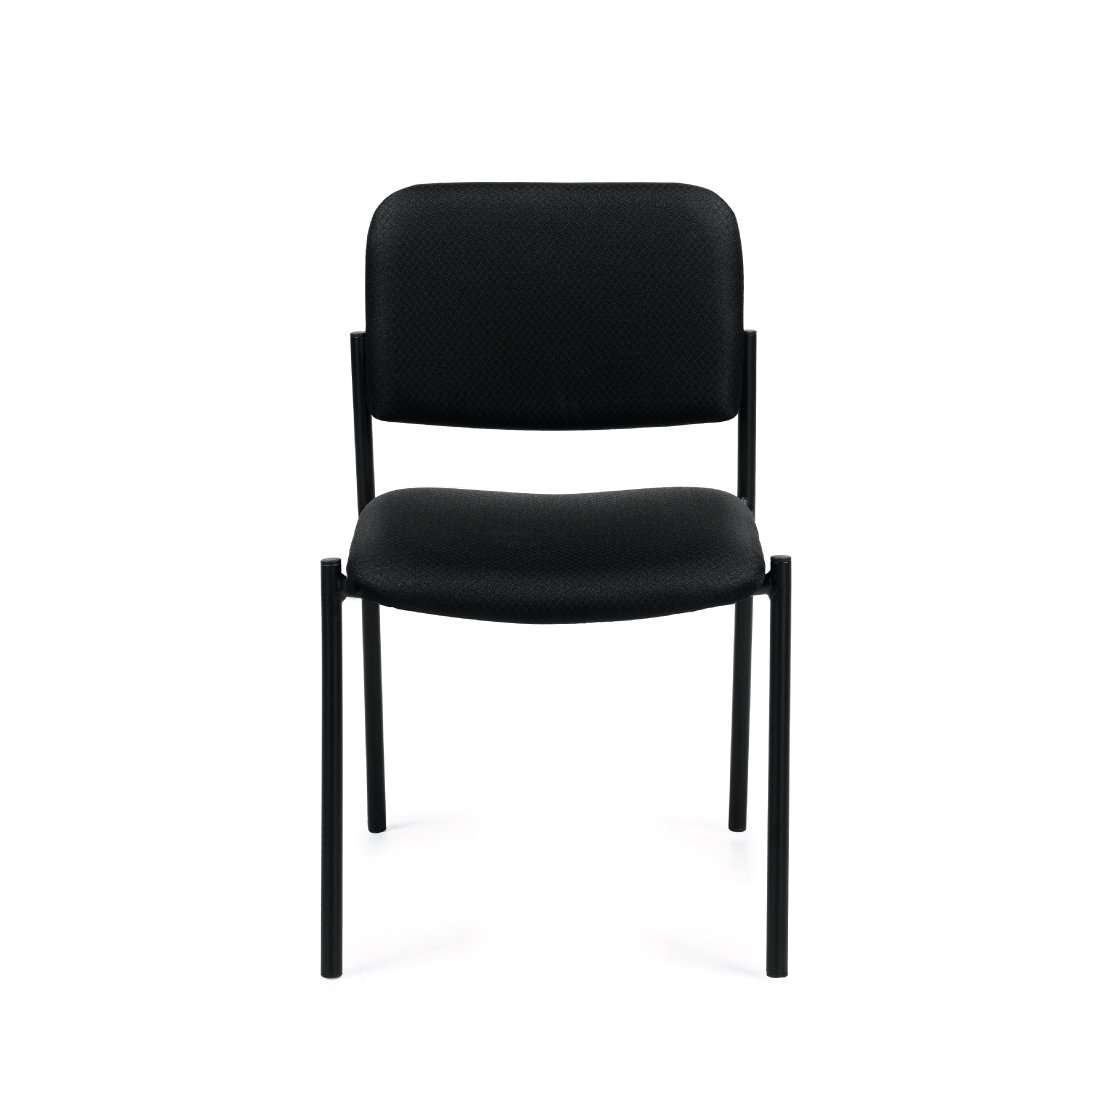 GOF 7 Piece Reception Room Black Chair Table Set / 10% OFF - Kainosbuy.com